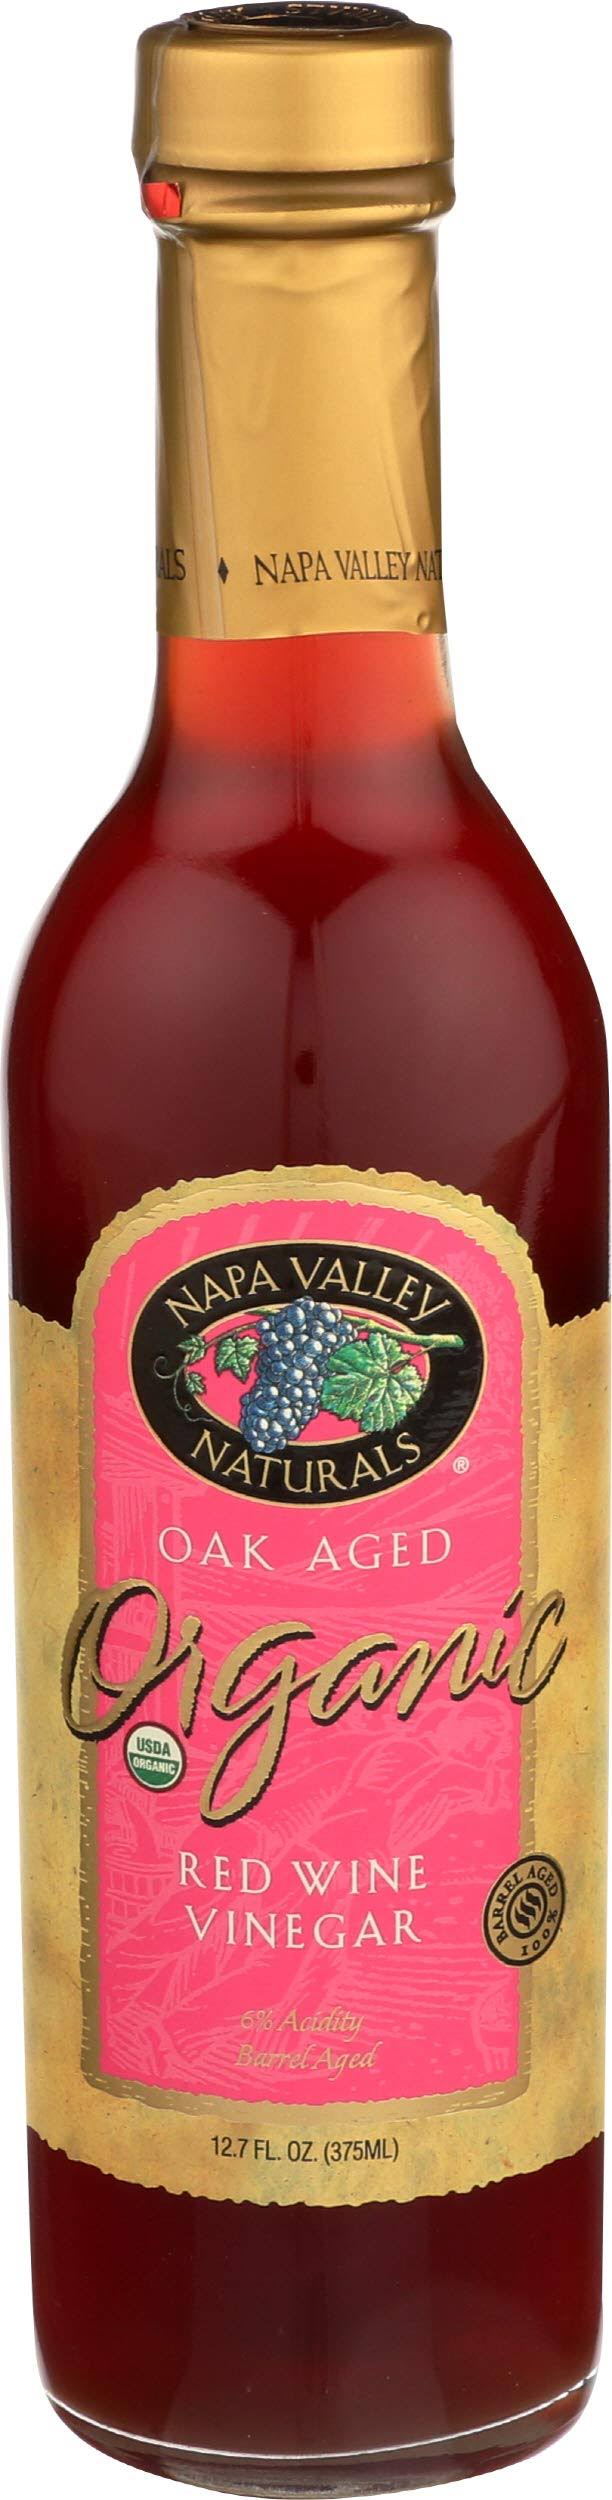 Napa Valley Naturals Organic Red Wine Vinegar - 12.7 oz